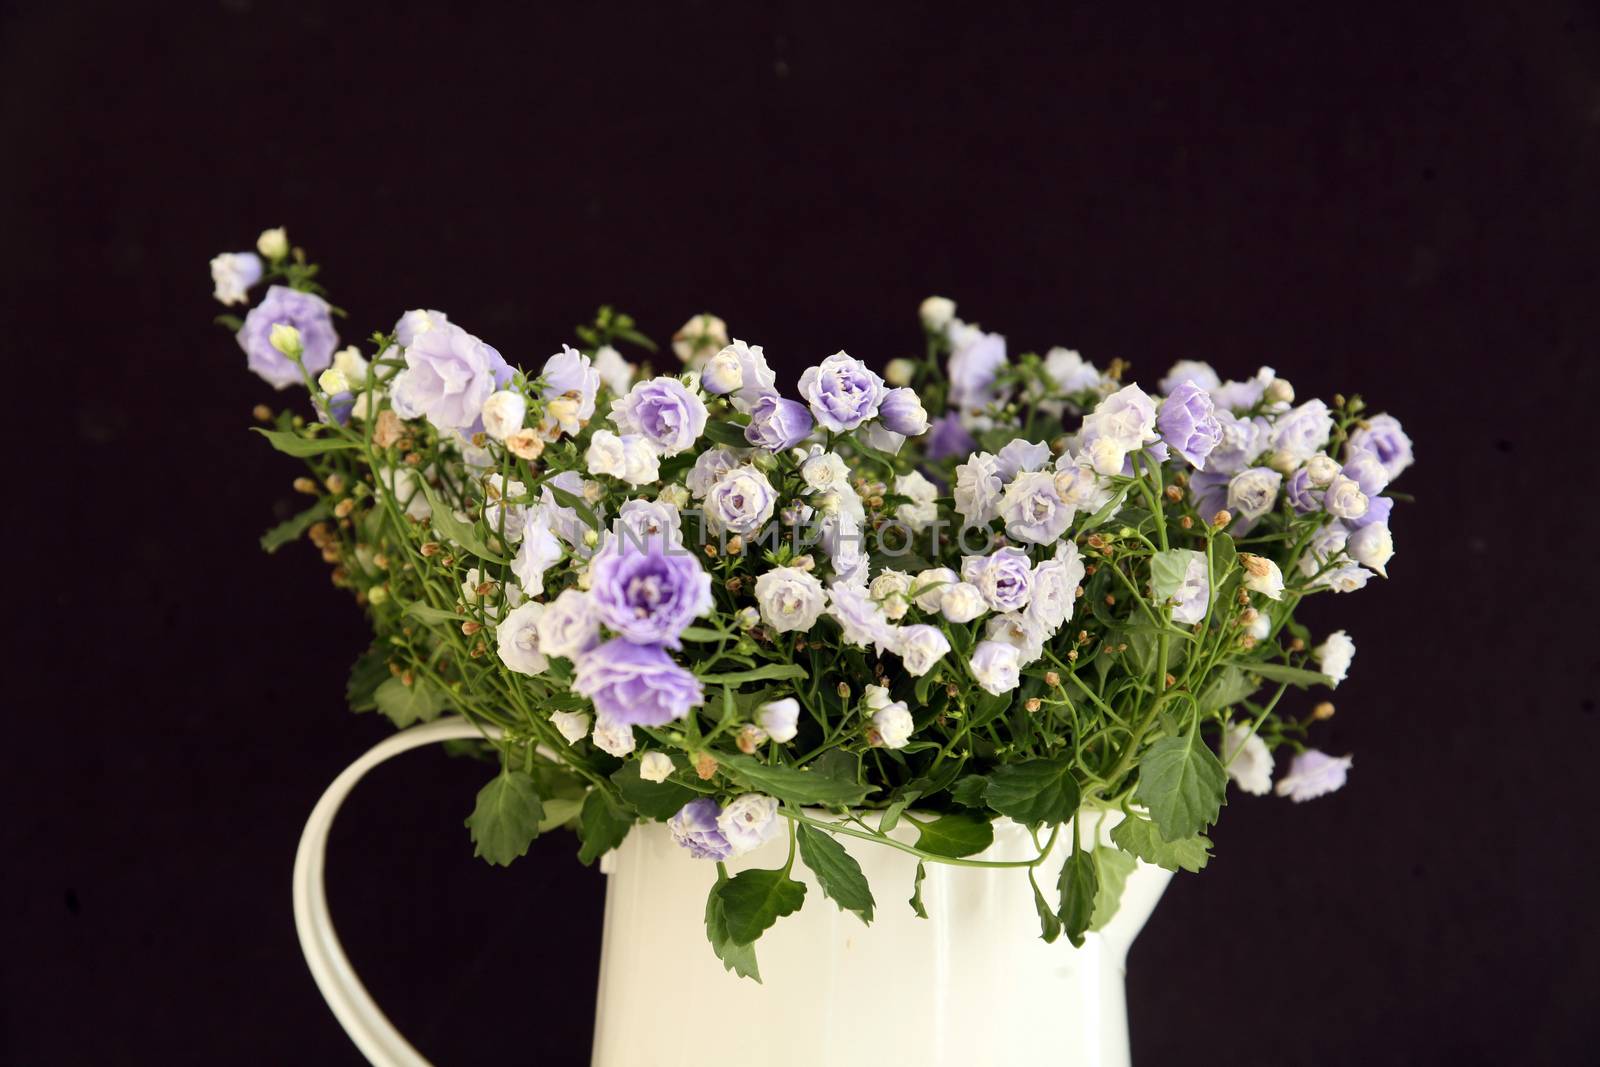 Bouquet of wild flowers in a jug